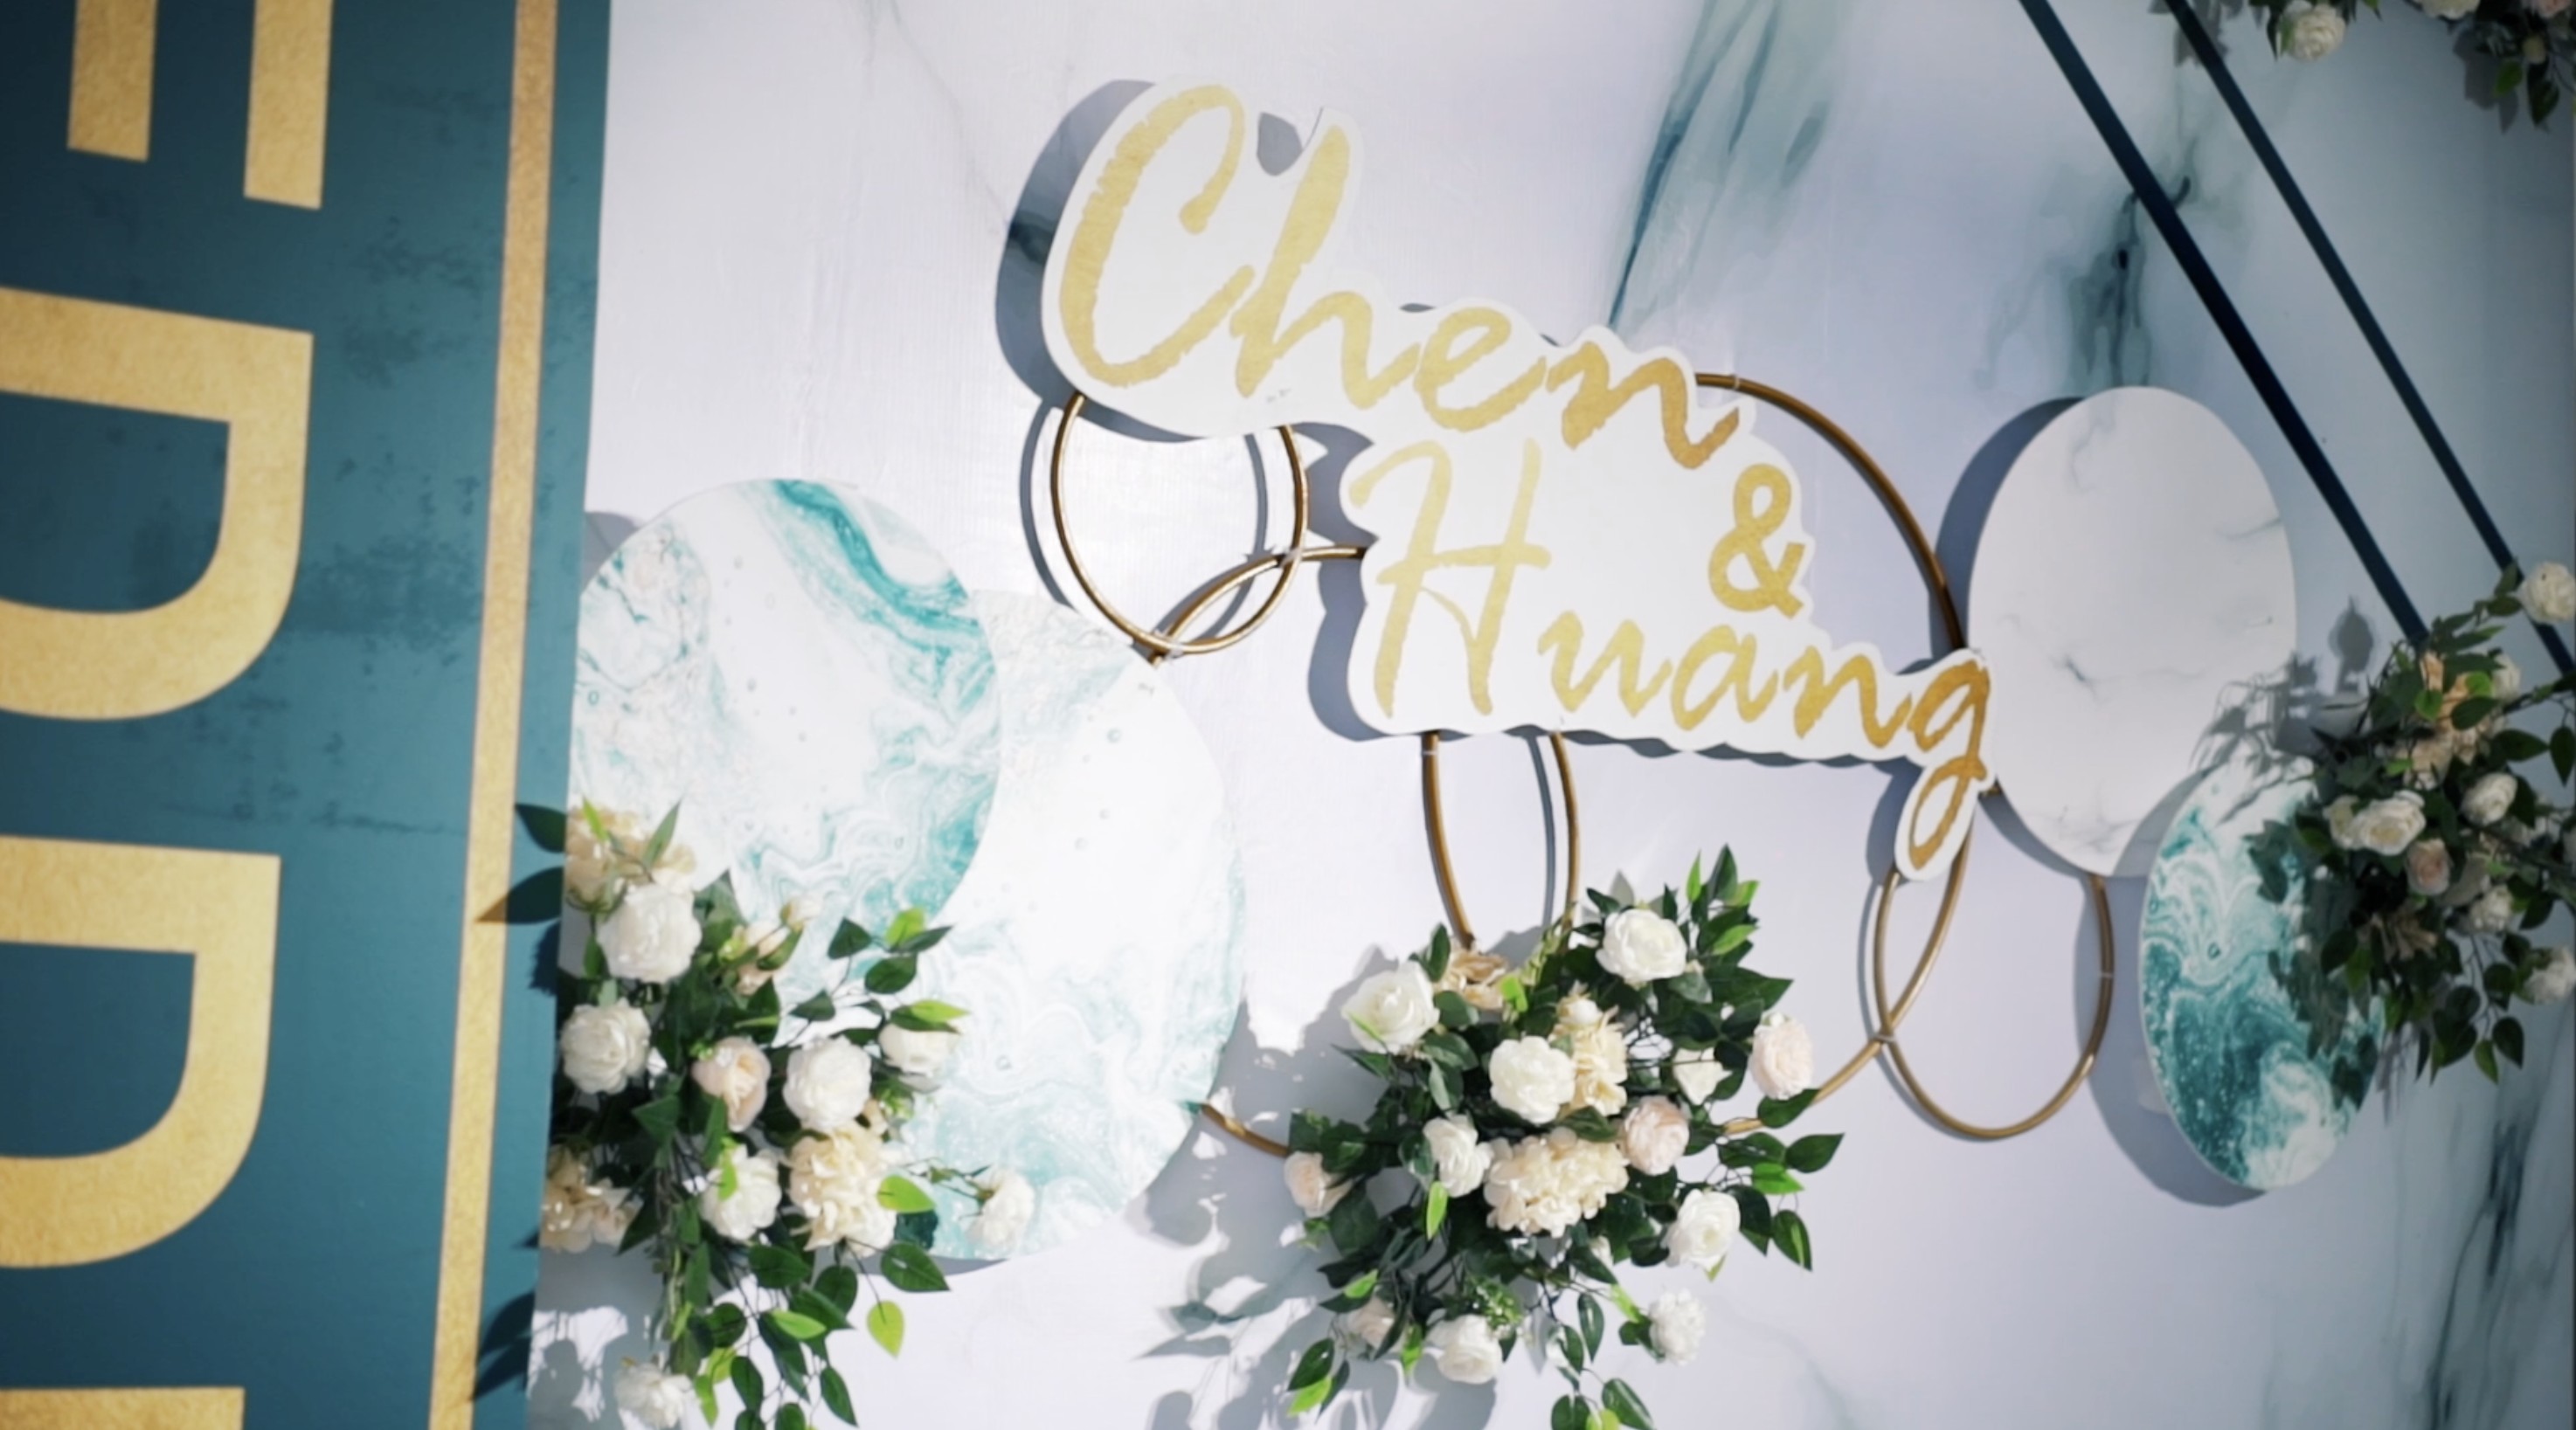 Nov 17,2019 婚礼MV「CHEN&HUANG」· 柒玖影像 